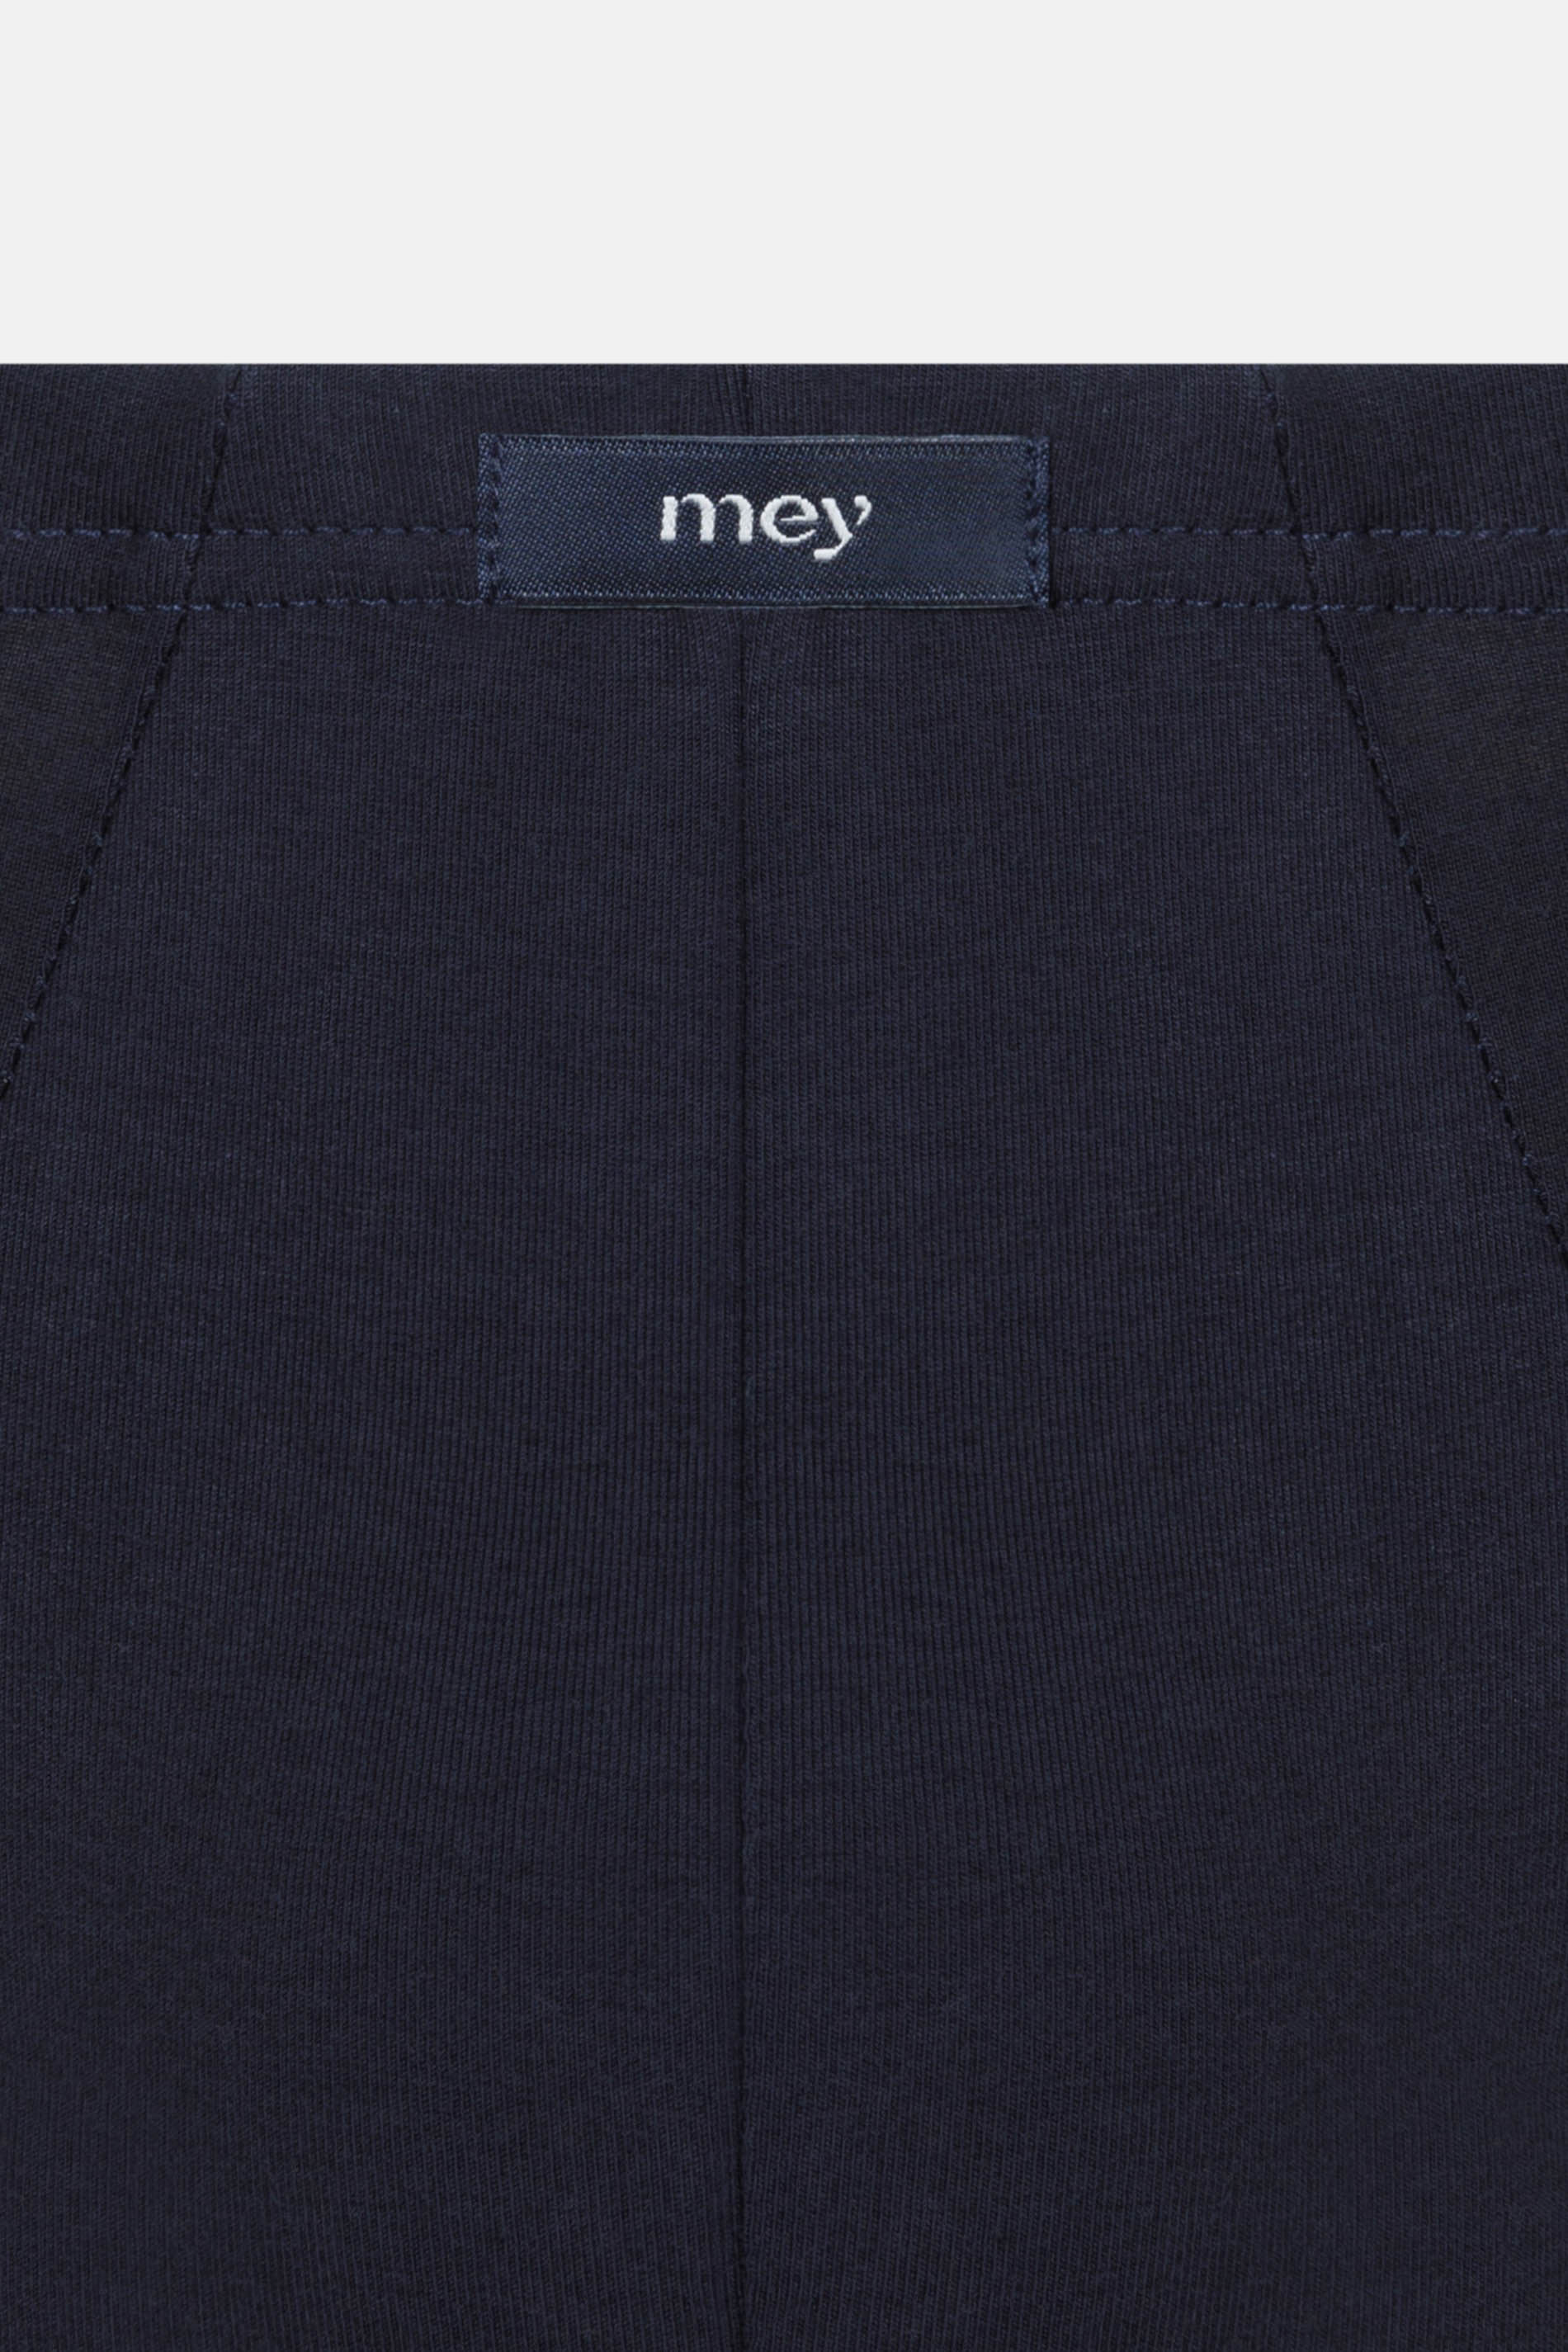 | Shorty Farbe Jersey Serie Doppelpack blau | mey® blue